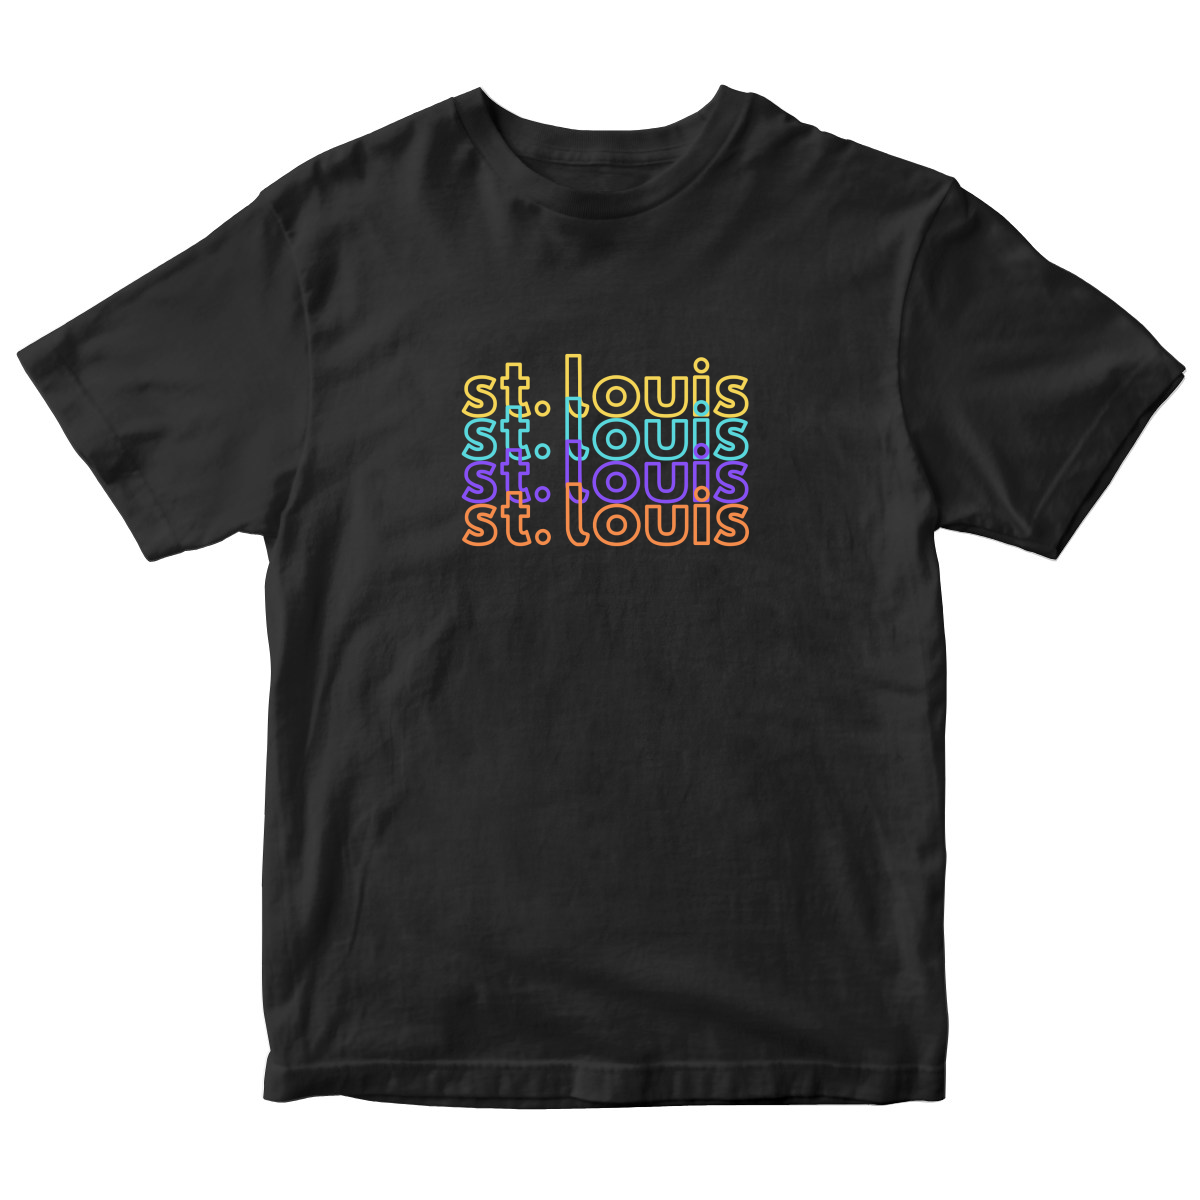 St. Louis Kids T-shirt | Black